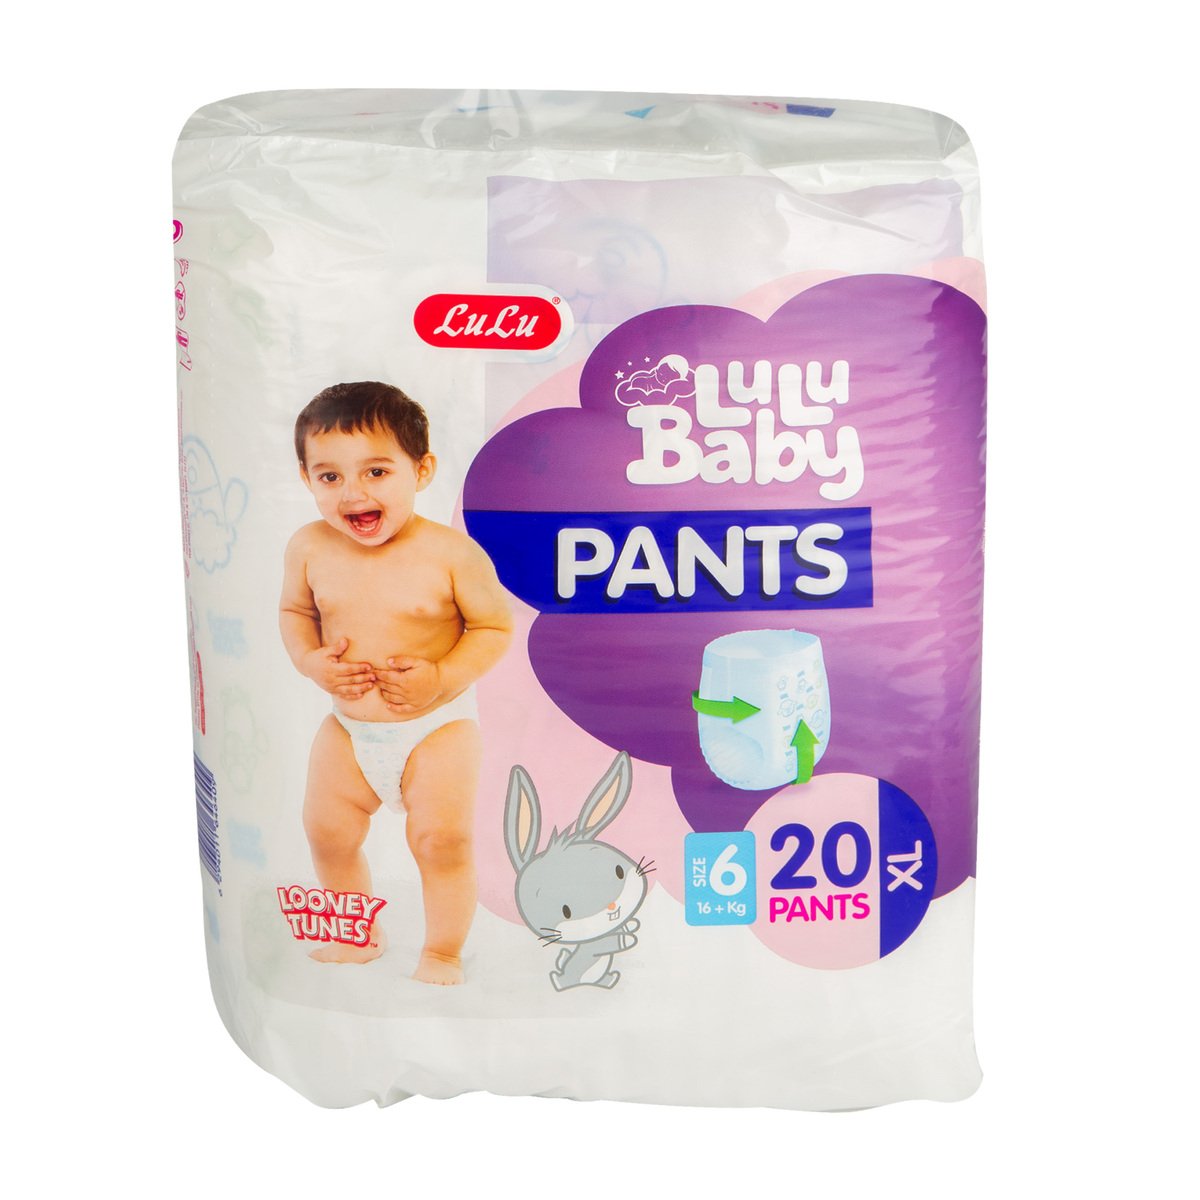 Lulu PL LuLu Baby Diaper Pants Size 6 XL 16+kg 20pcs